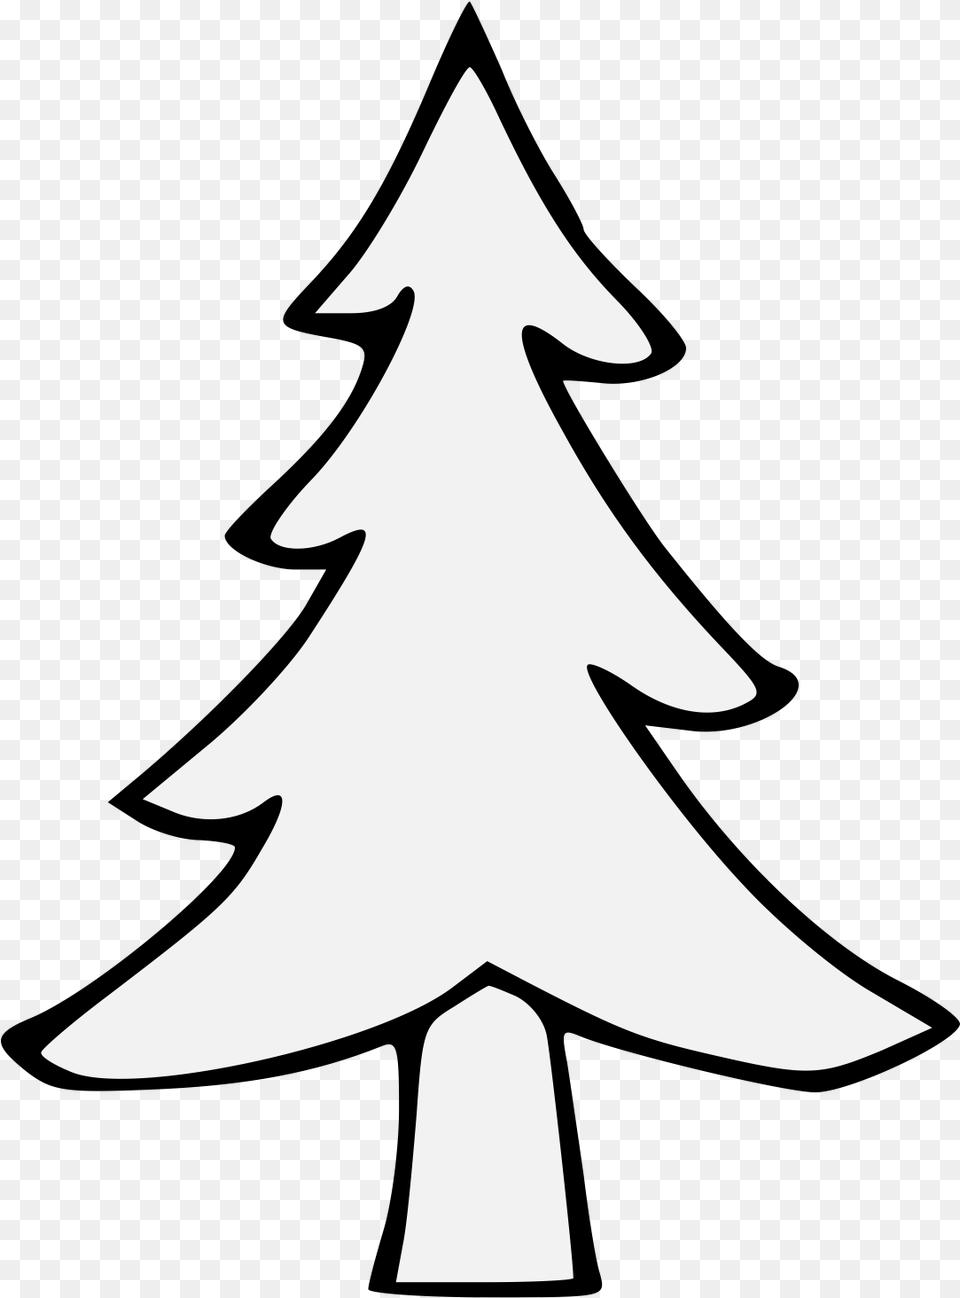 Download Hd Details Christmas Tree Pine Tree Heraldry, Stencil, Animal, Fish, Sea Life Free Png